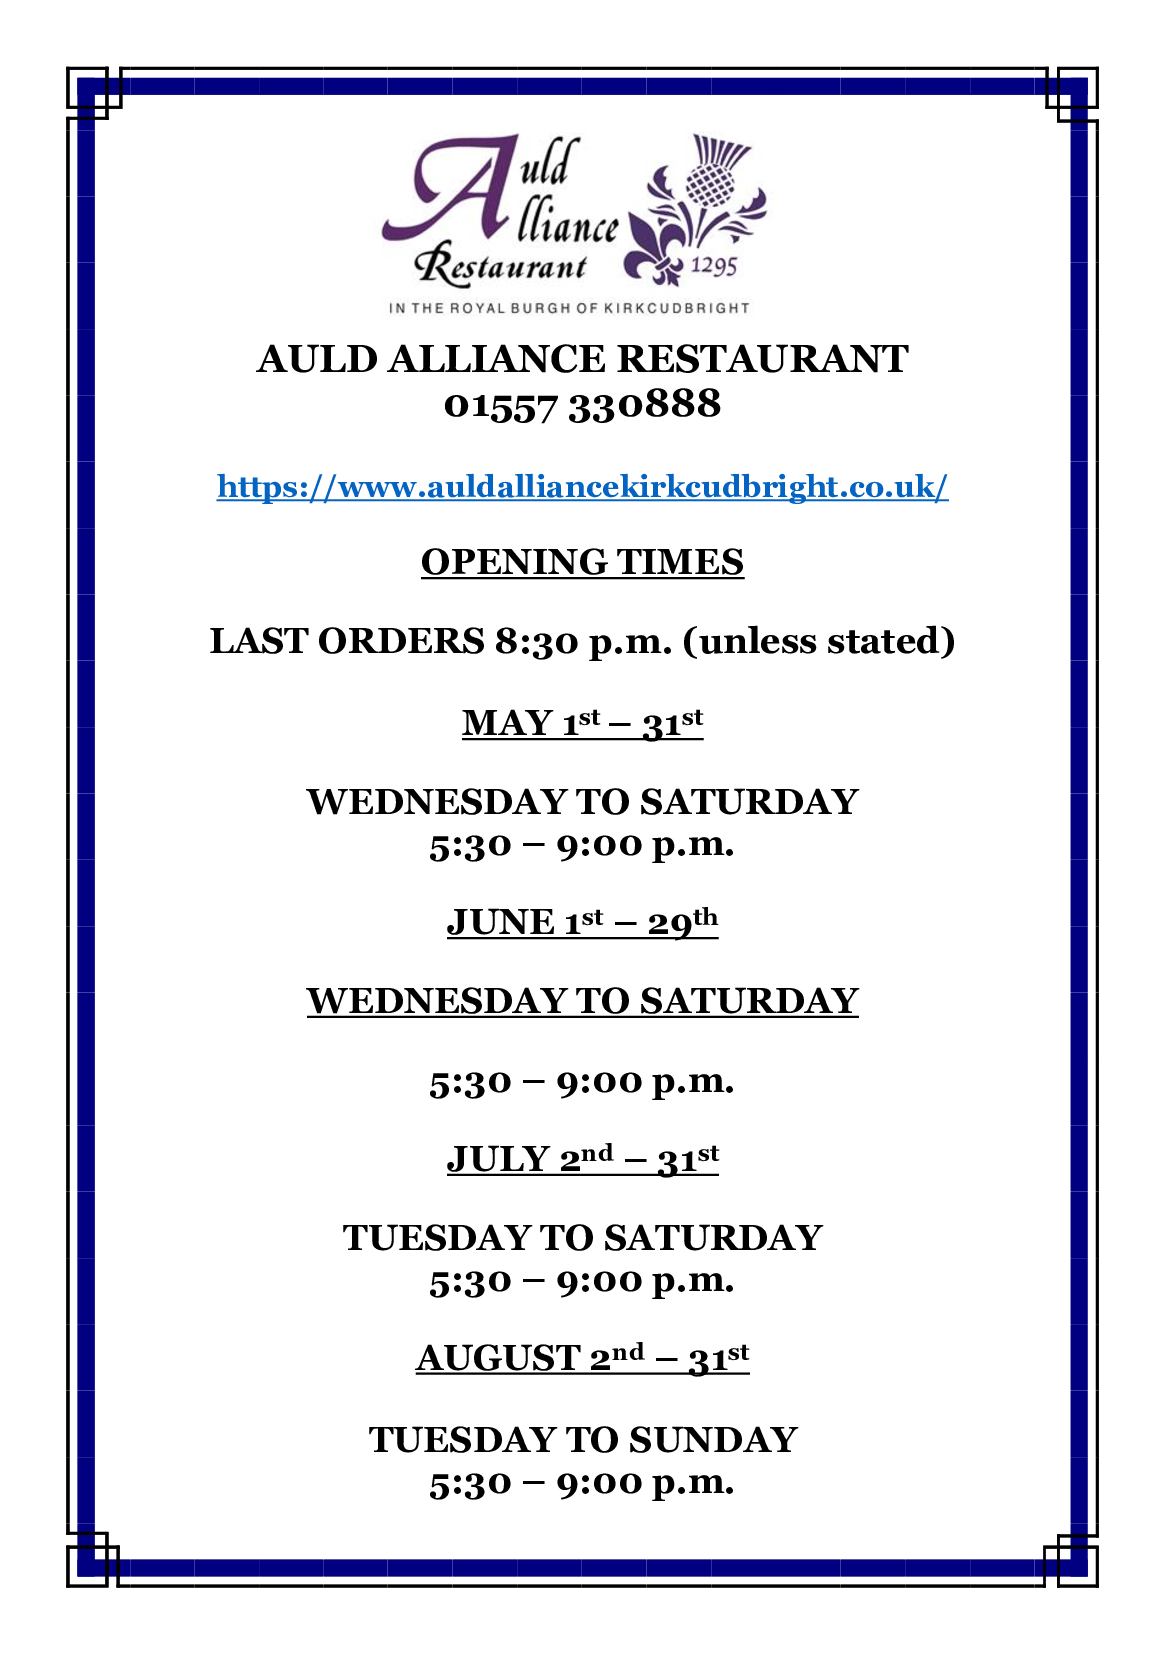 The Auld Alliance Restaurant Kirkcudbright